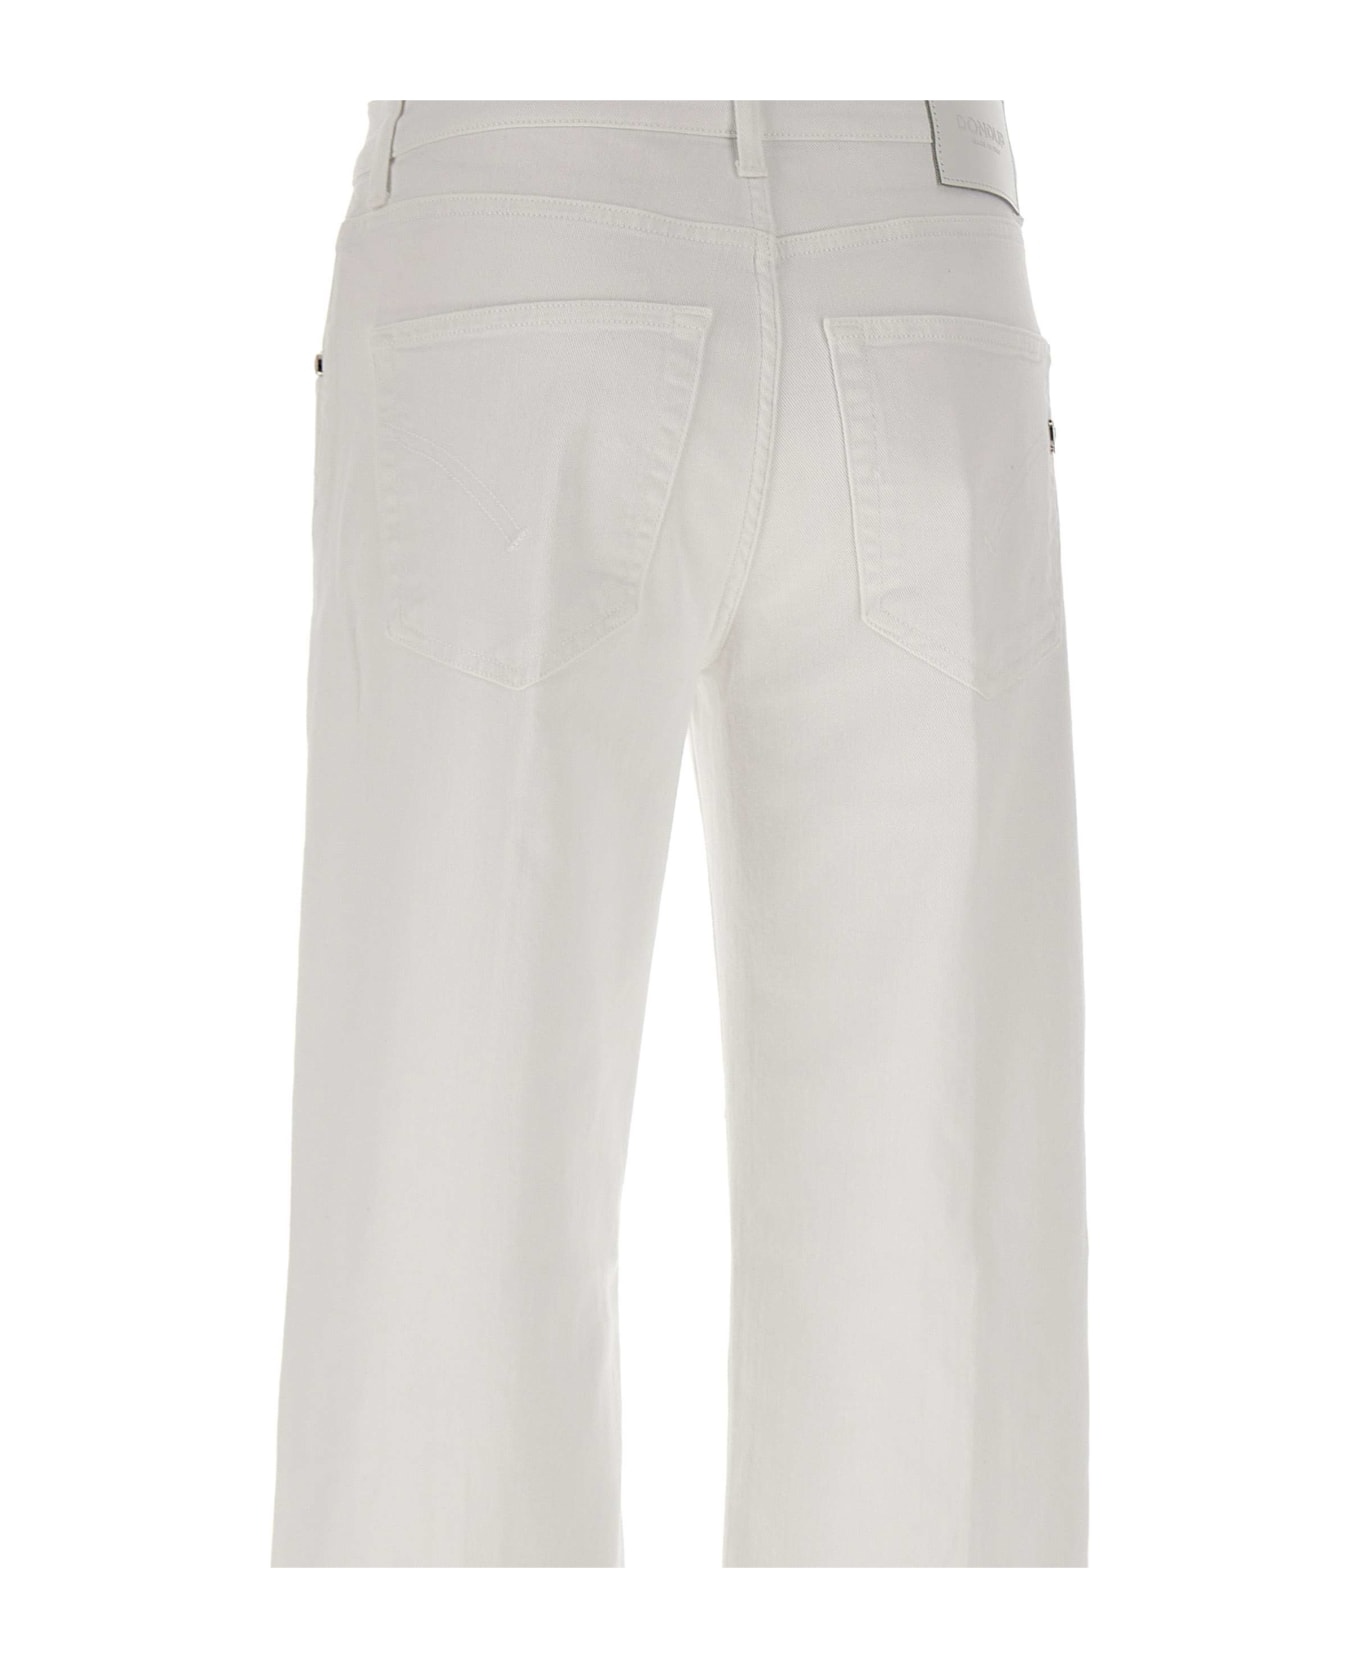 Dondup "jacklyn" Cotton Jeans - WHITE